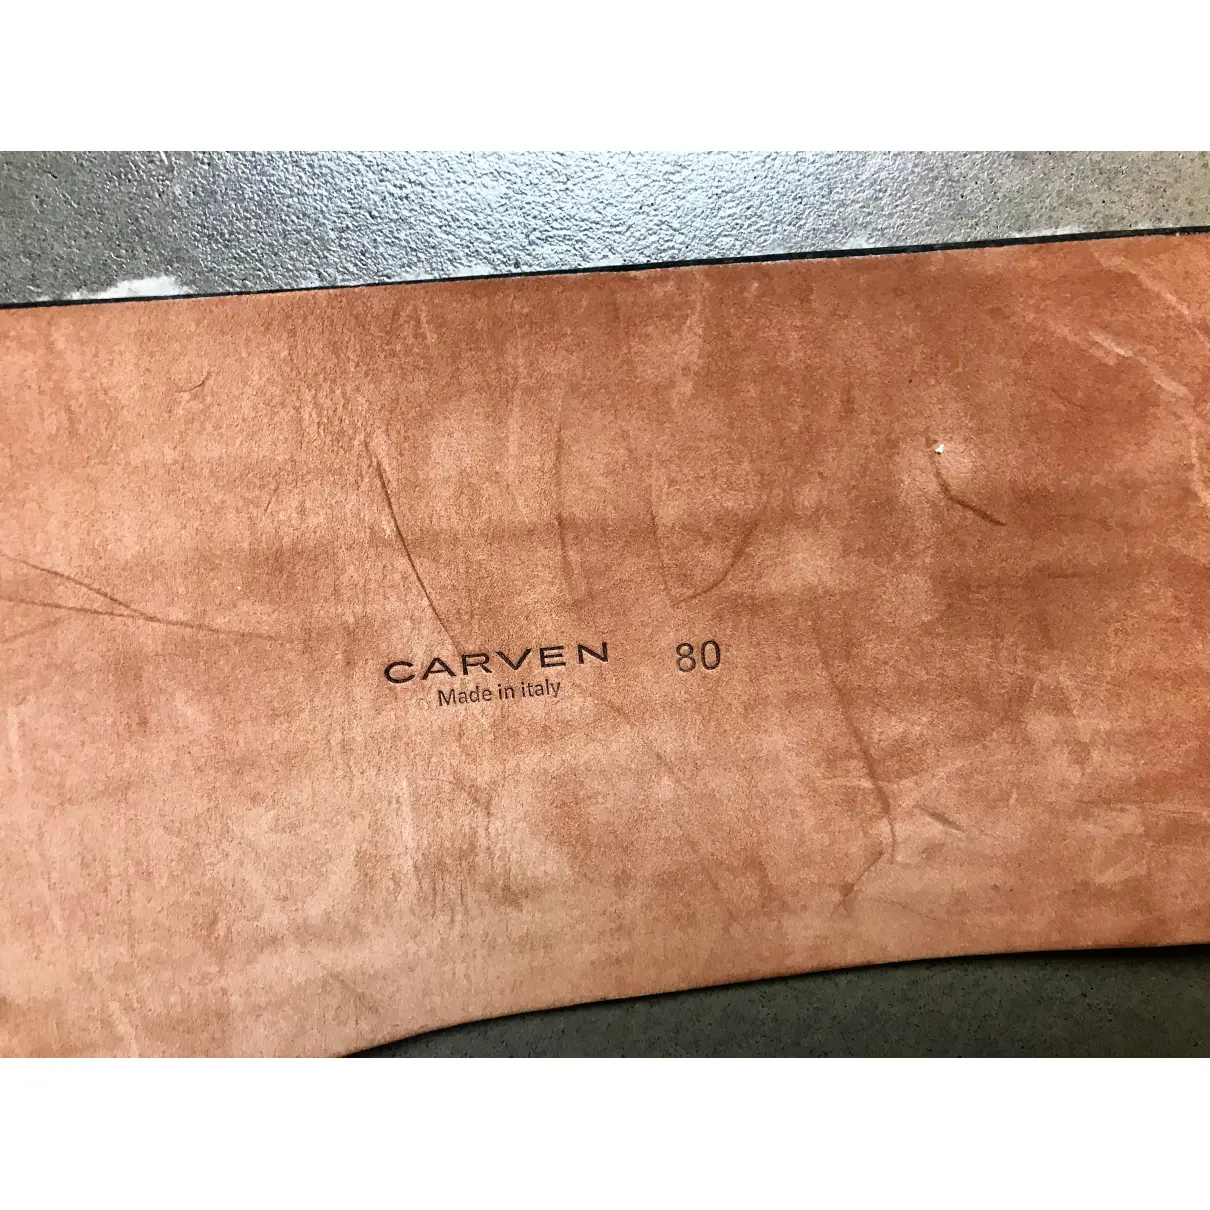 Patent leather belt Carven